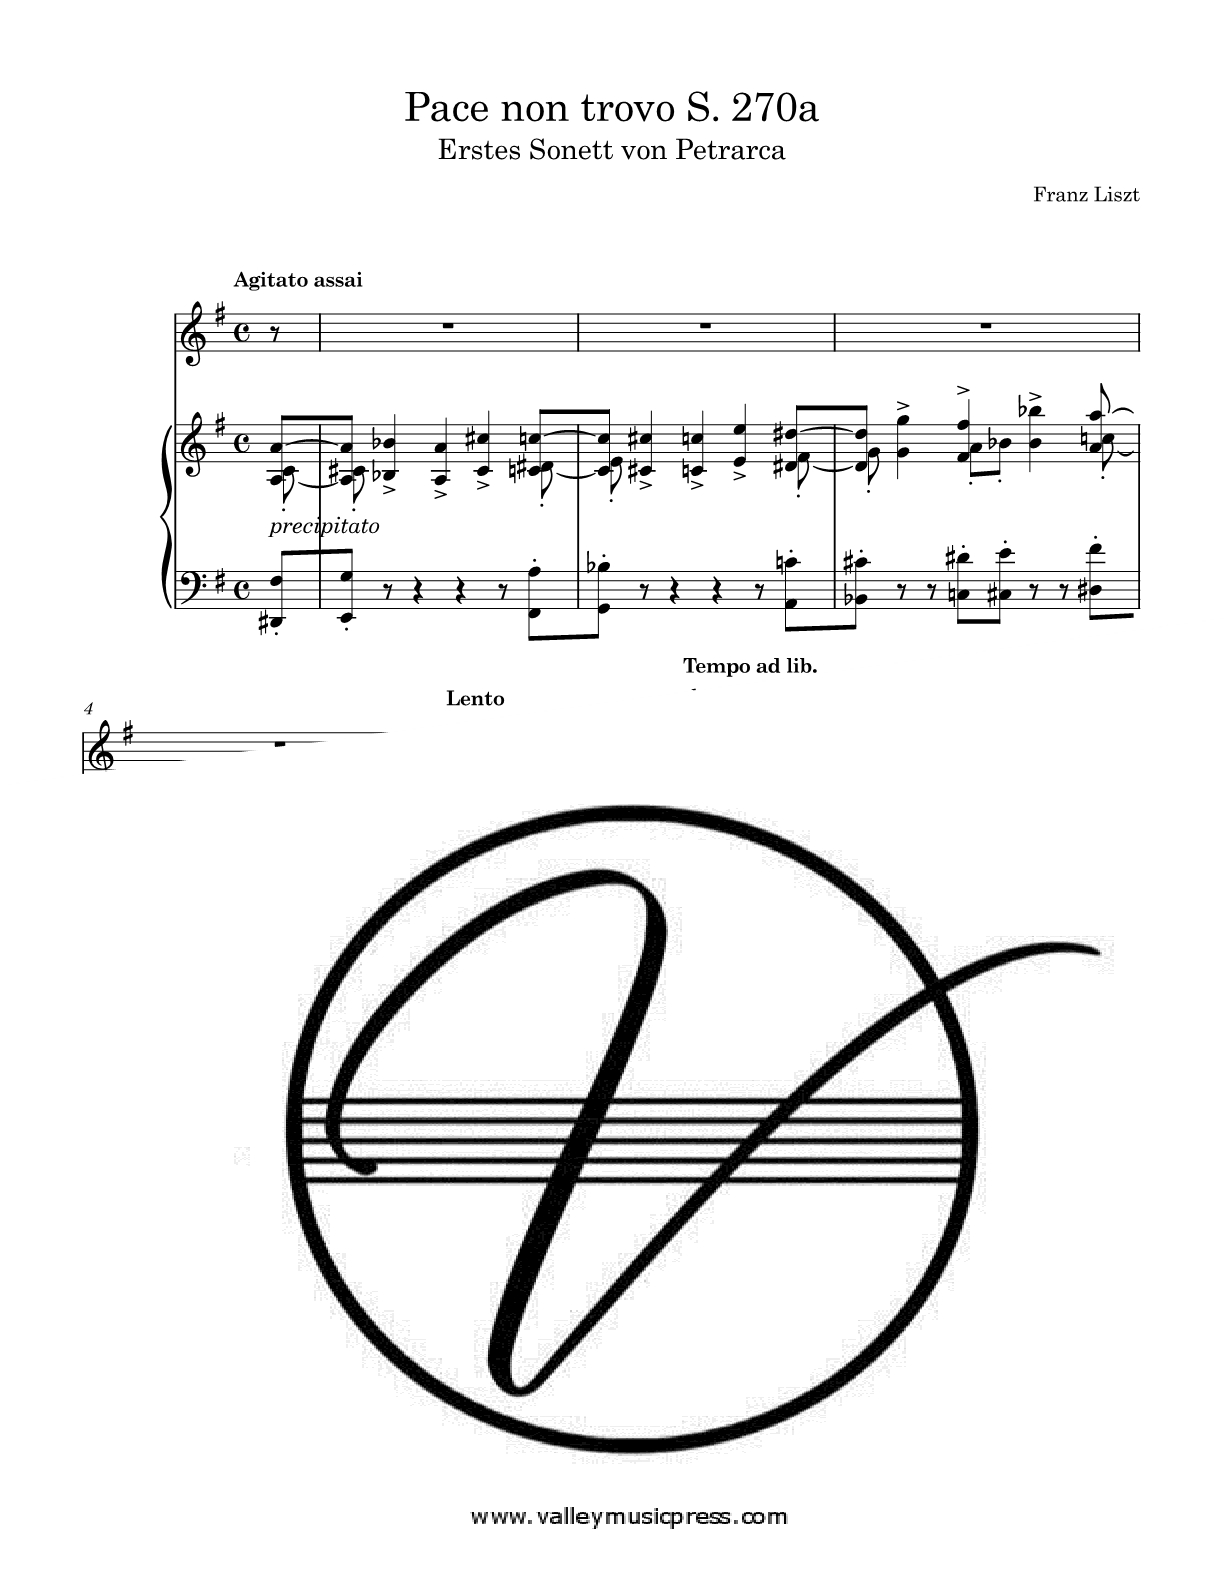 Liszt - Pace non trovo S. 270a (Voice)